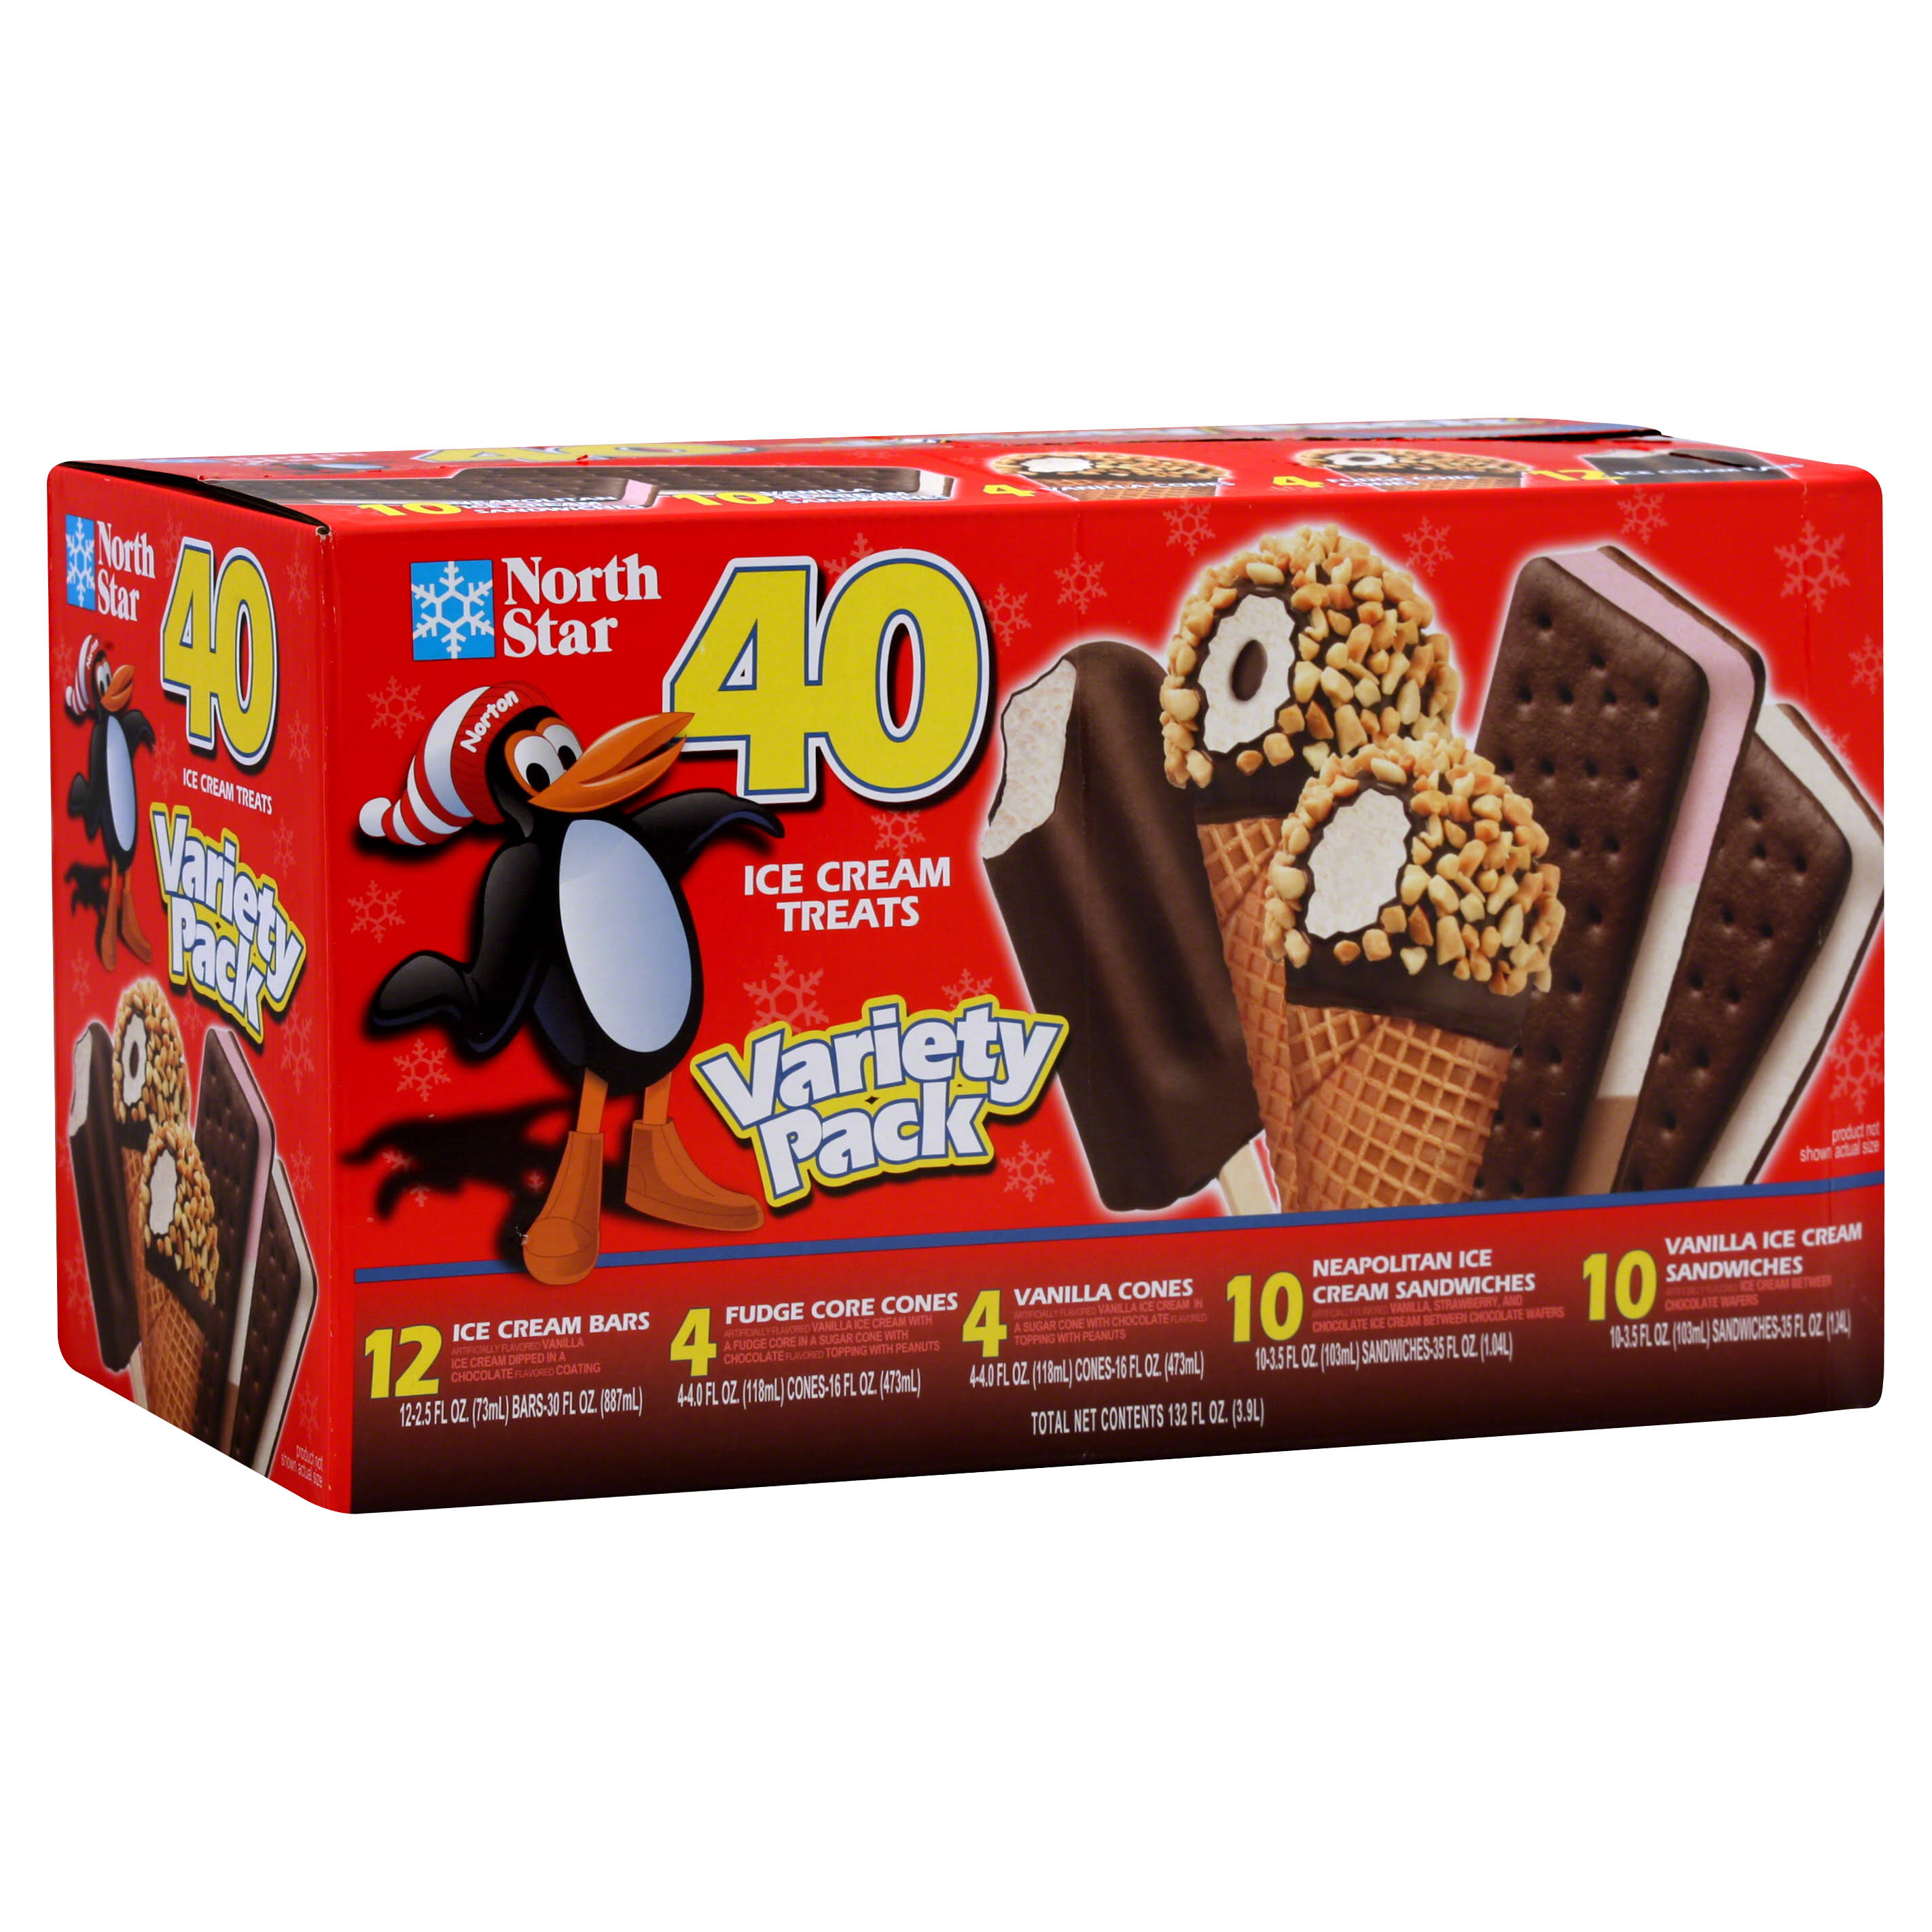 North Star Ice Cream Treats, Variety Pack - 40 treats, 132 fl oz